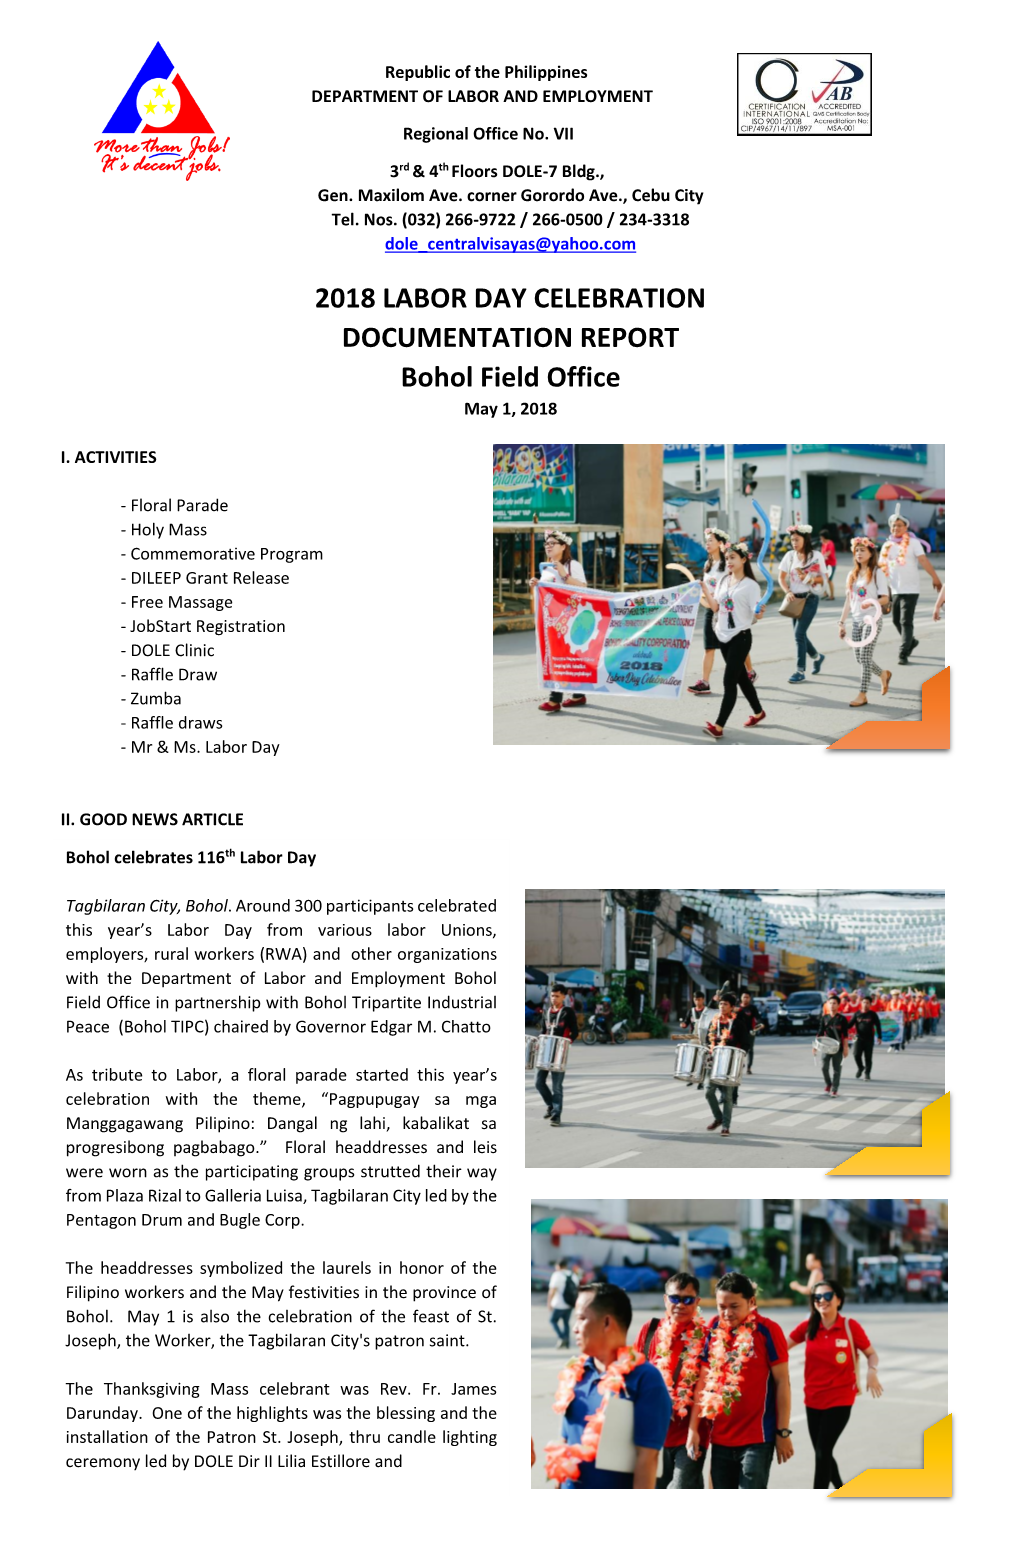 2018 LABOR DAY CELEBRATION DOCUMENTATION REPORT Bohol Field Office May 1, 2018